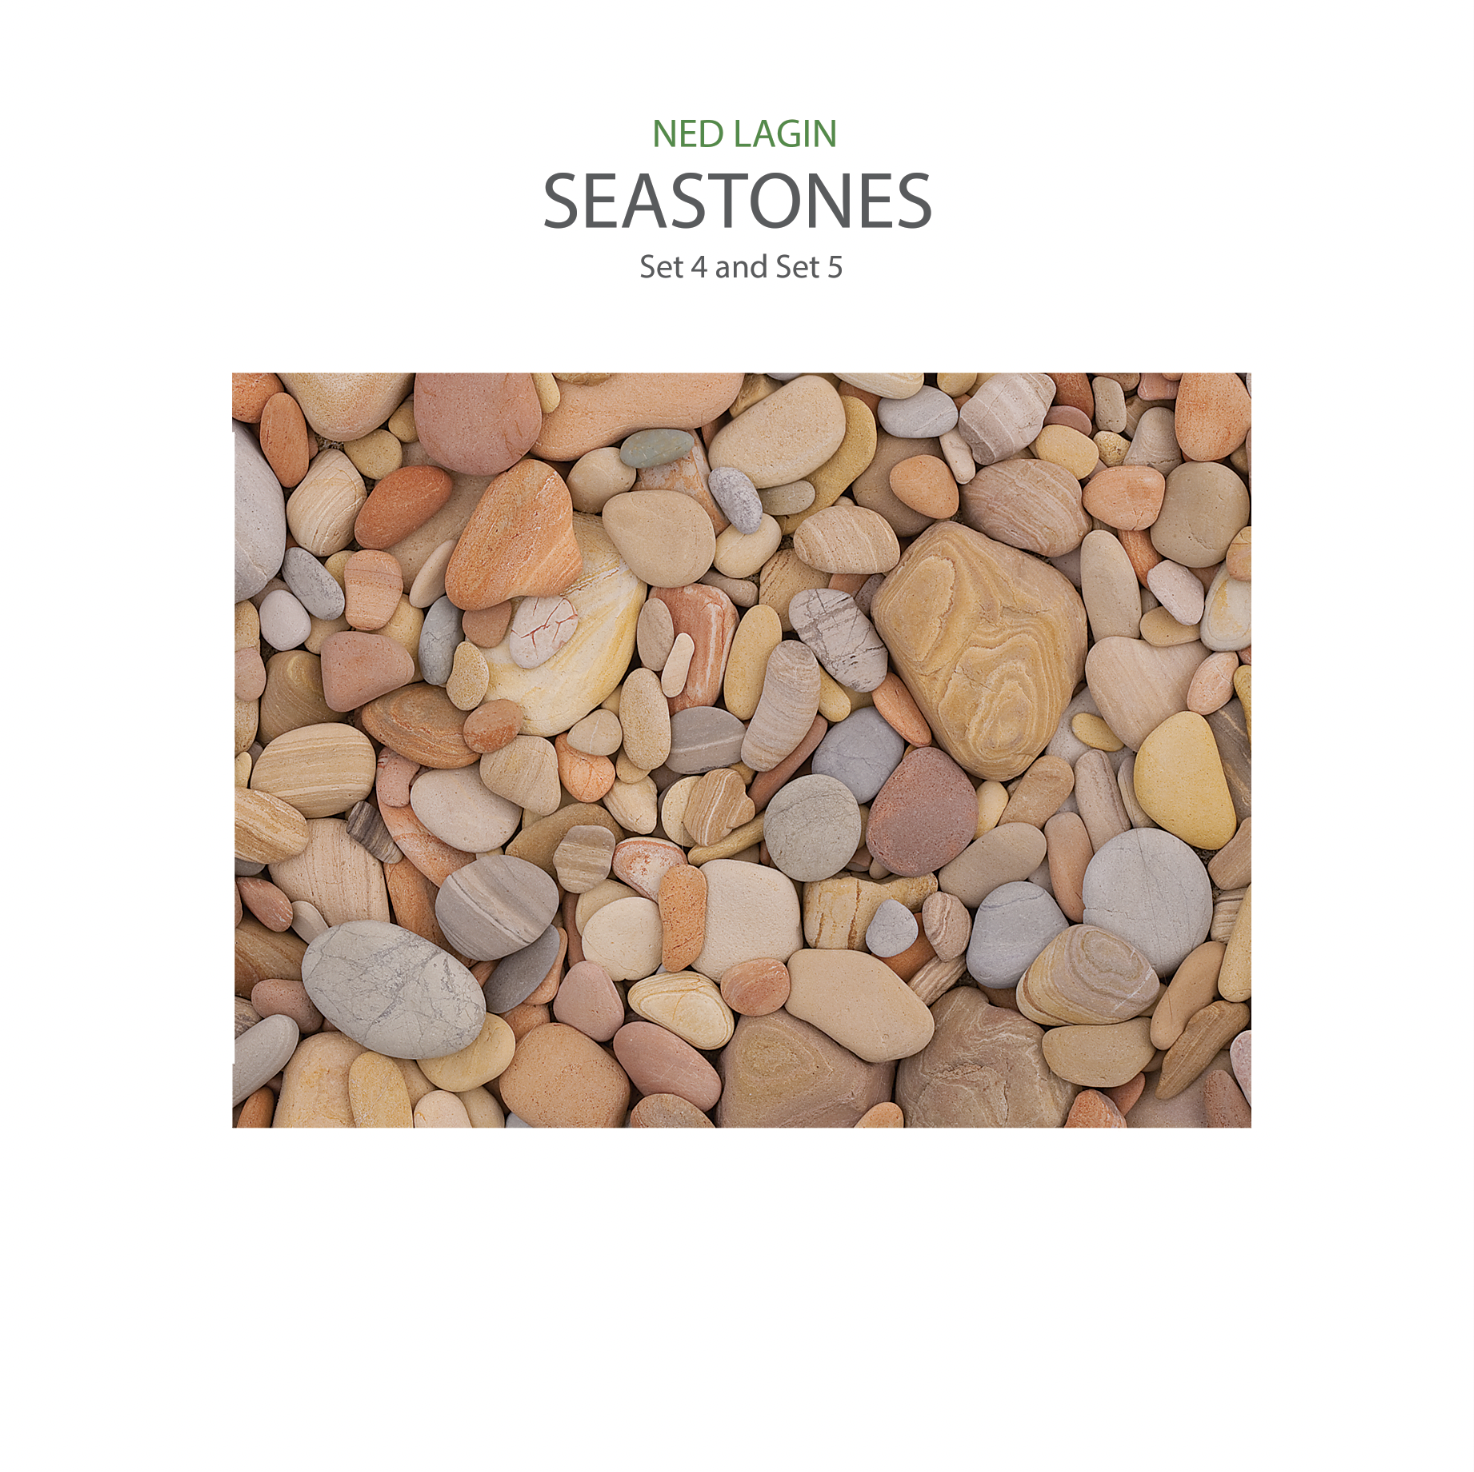 Seastones: Set 4 and Set 5 LP front cover